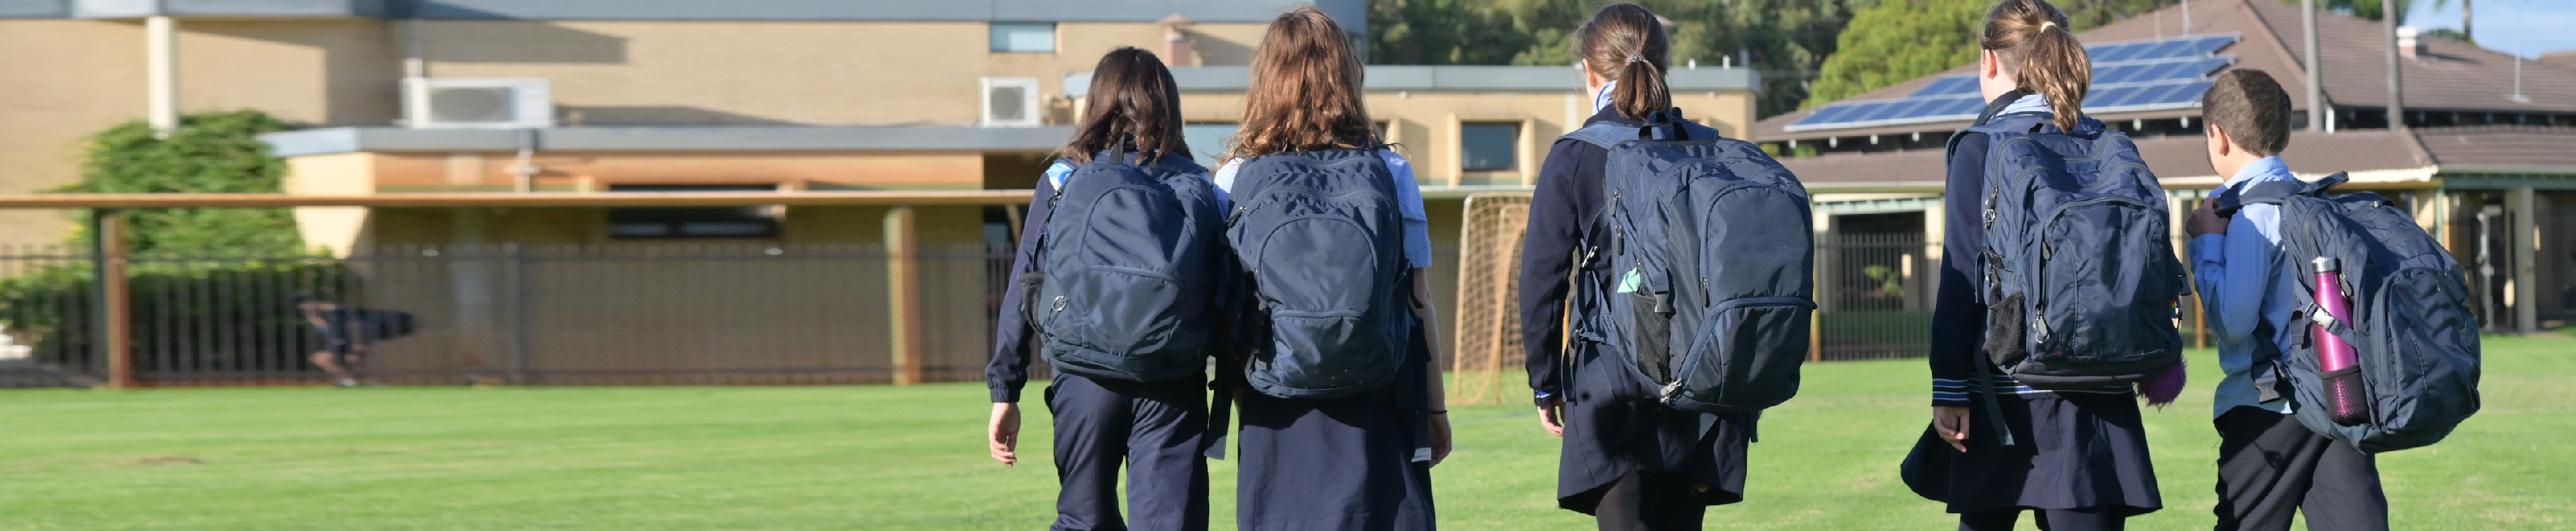 Students in uniform walking to school.